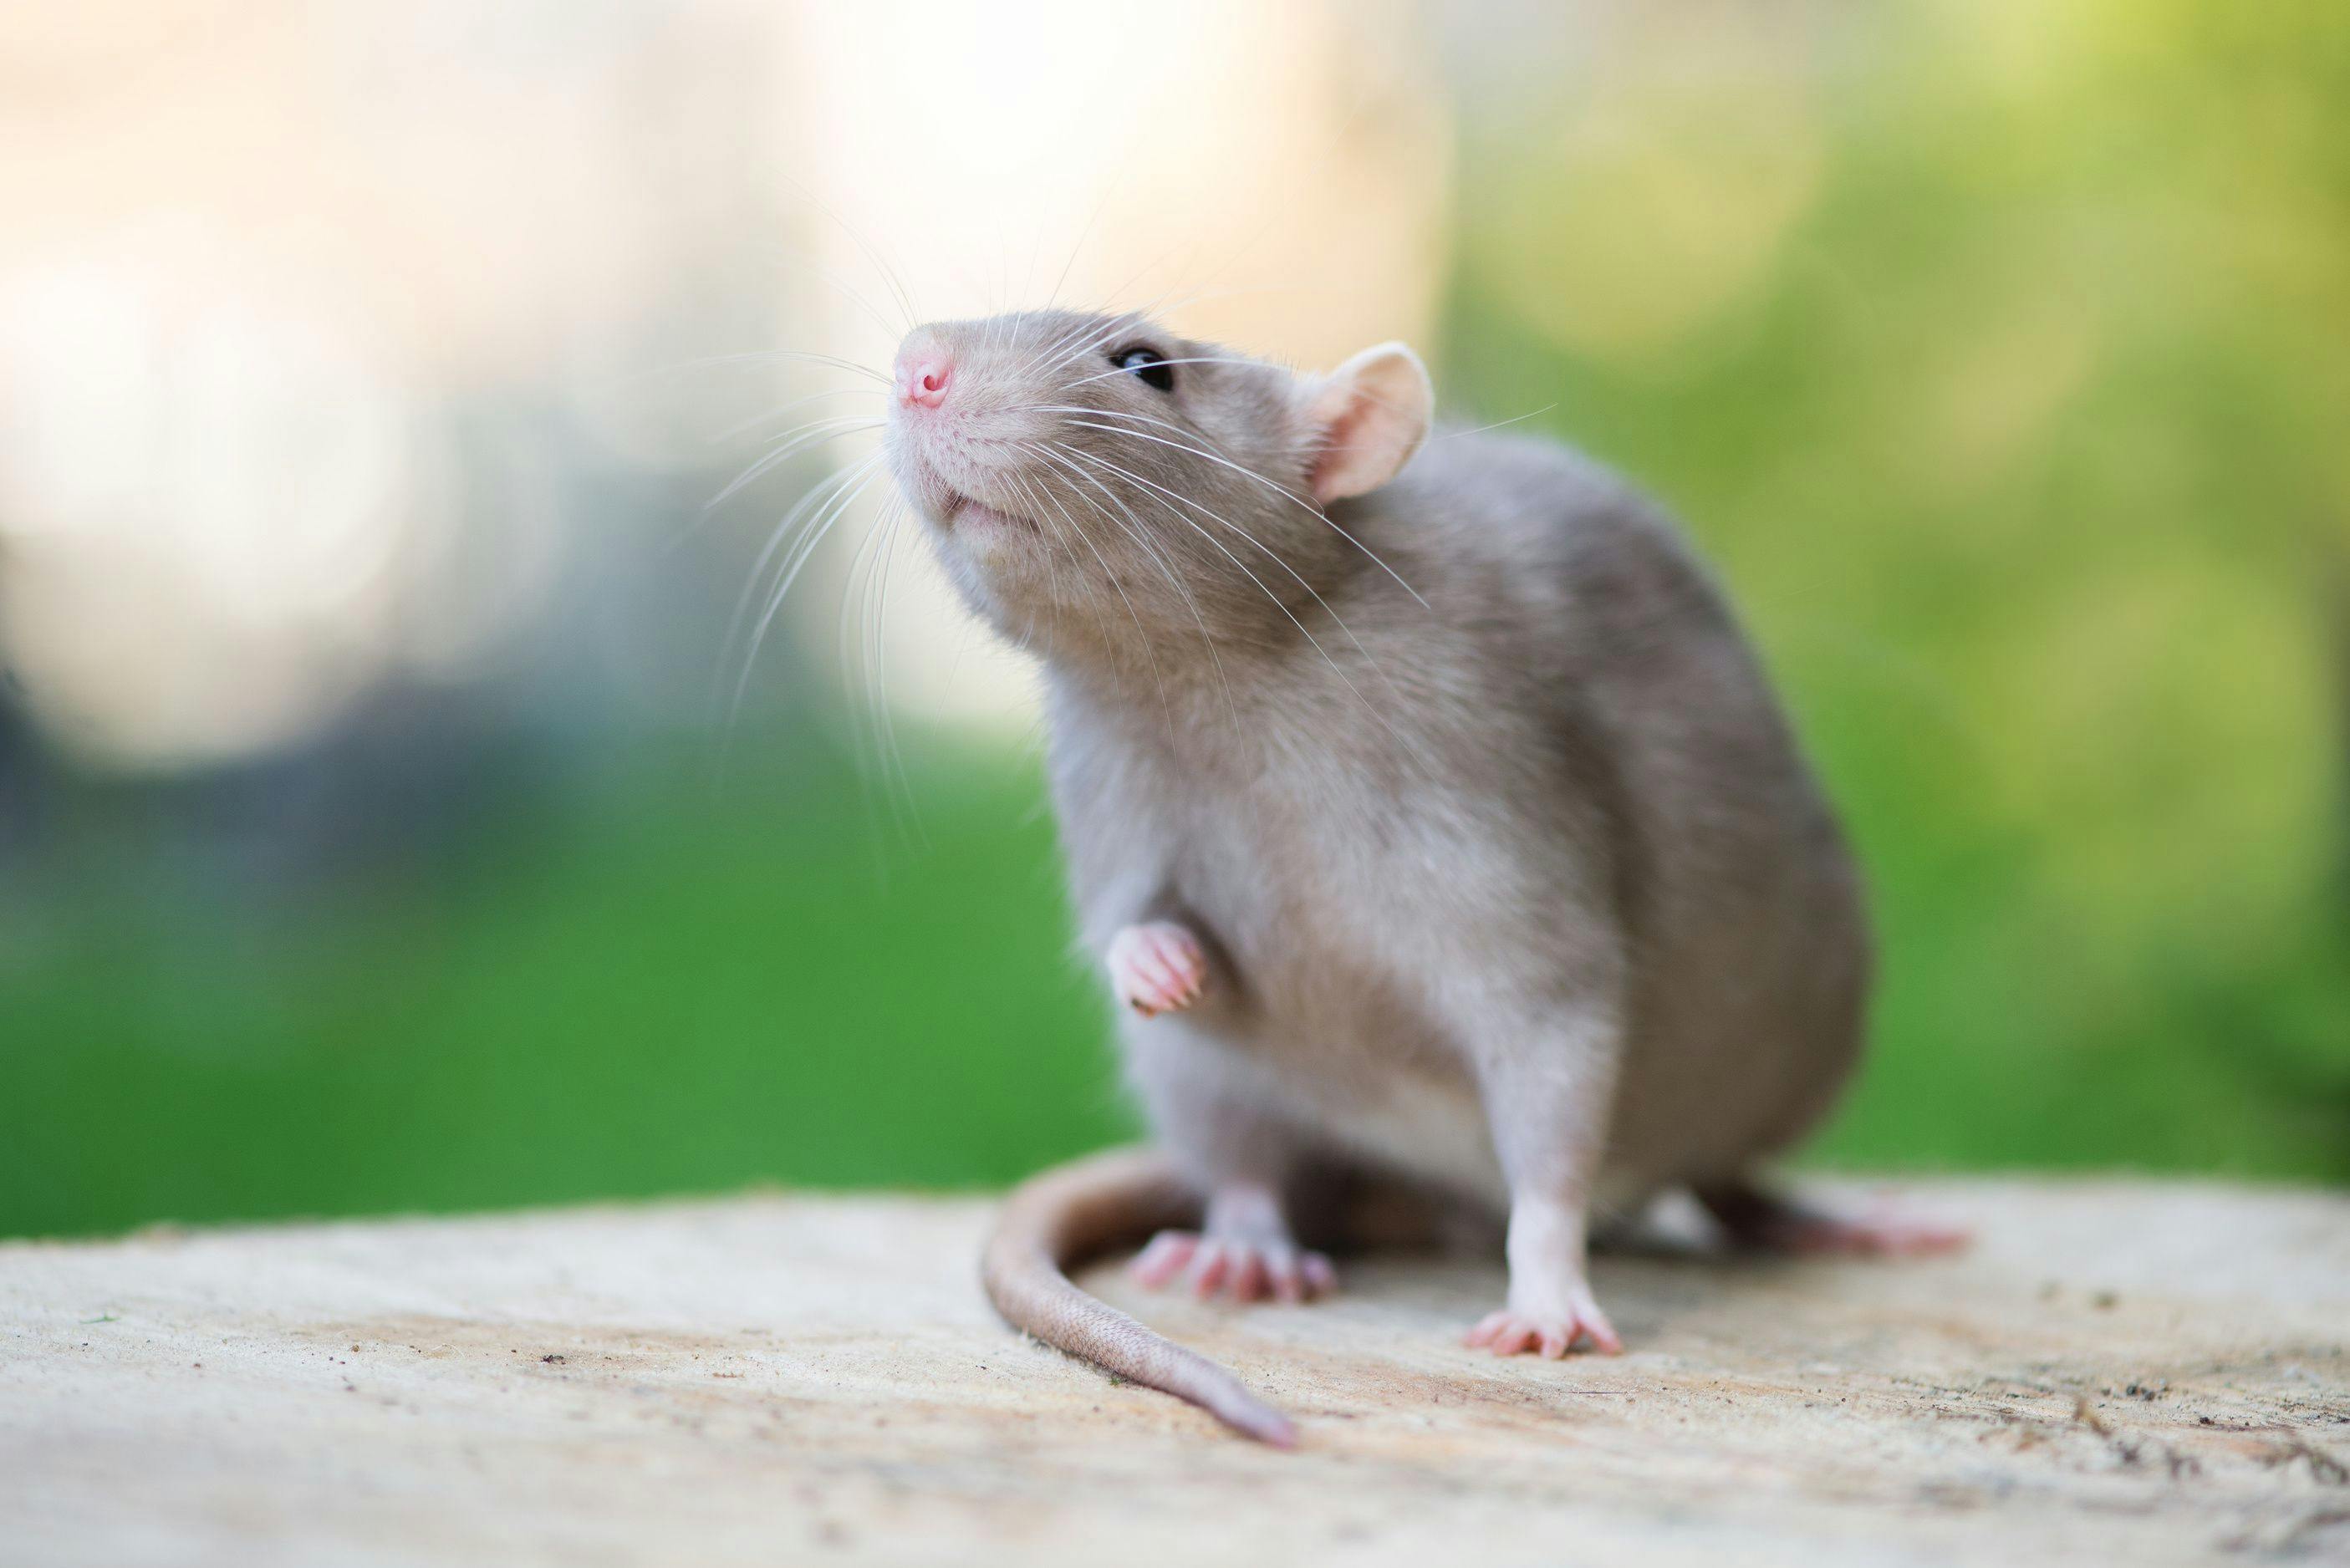 adorable grey pet rat posing outdoors | Image Credit: © otsphoto - stock.adobe.com